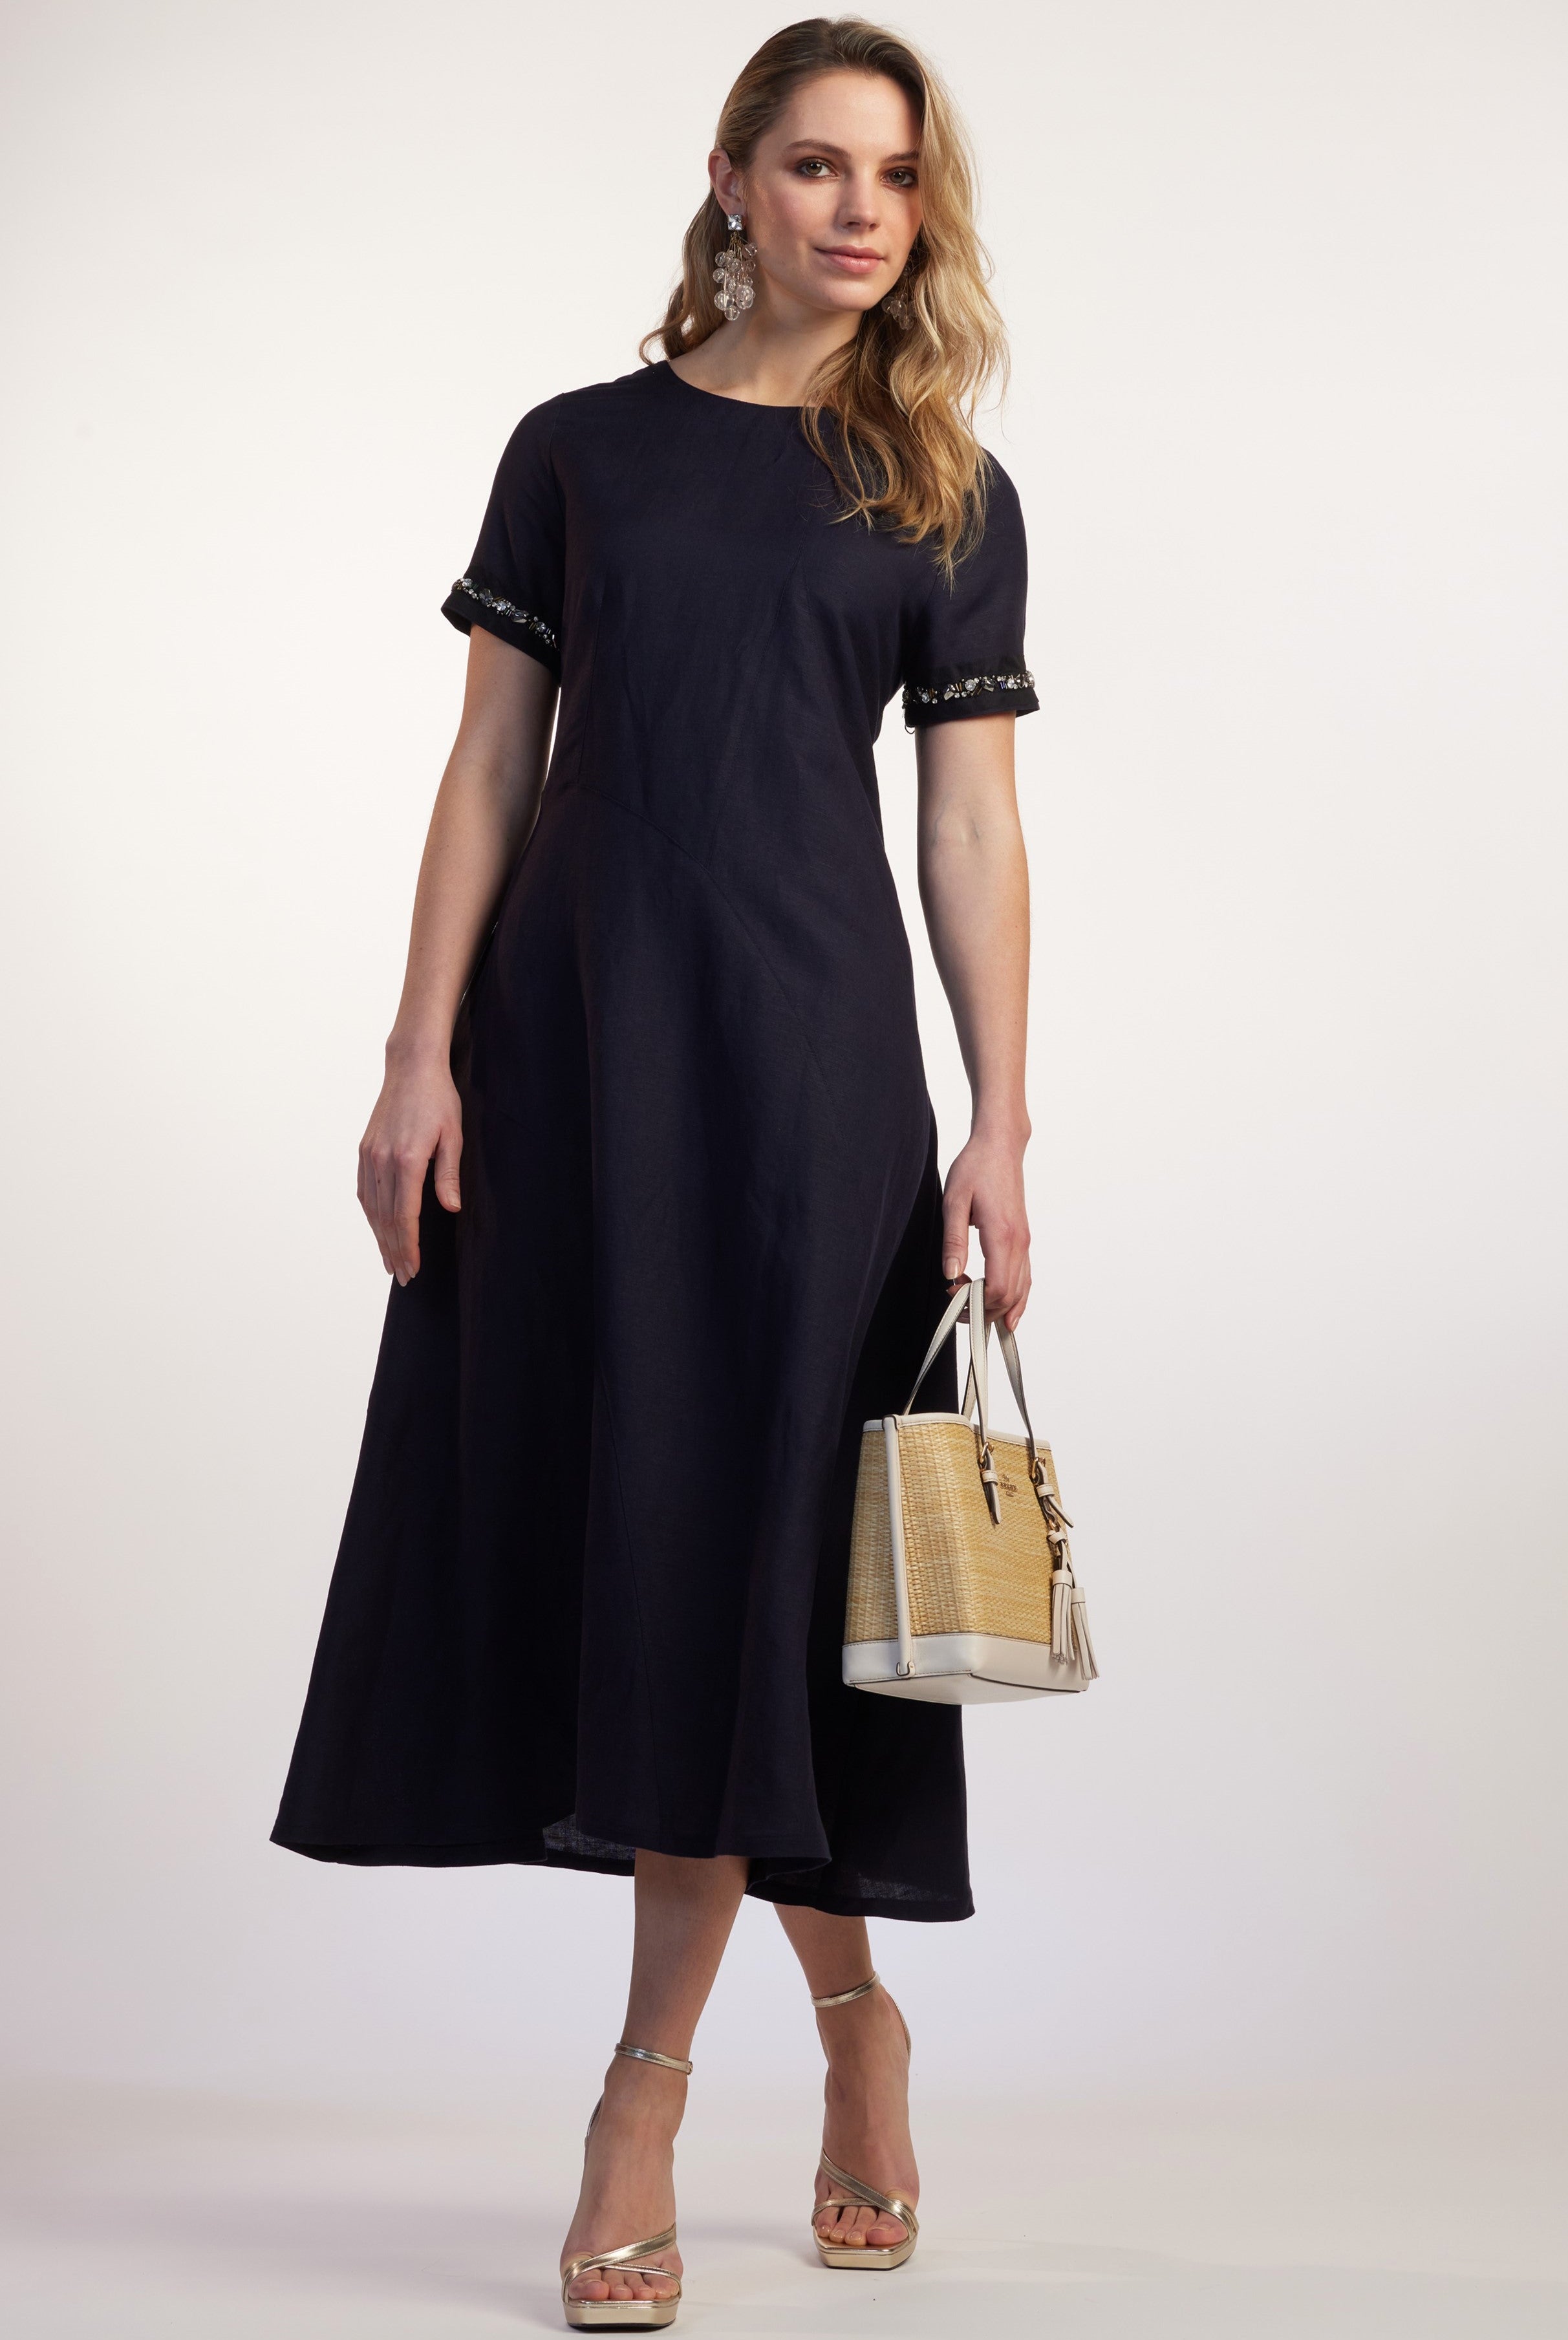 PAULA RYAN RELAXED Scoop Neck Beaded Sleeve Linen Dress - Black - Paula Ryan